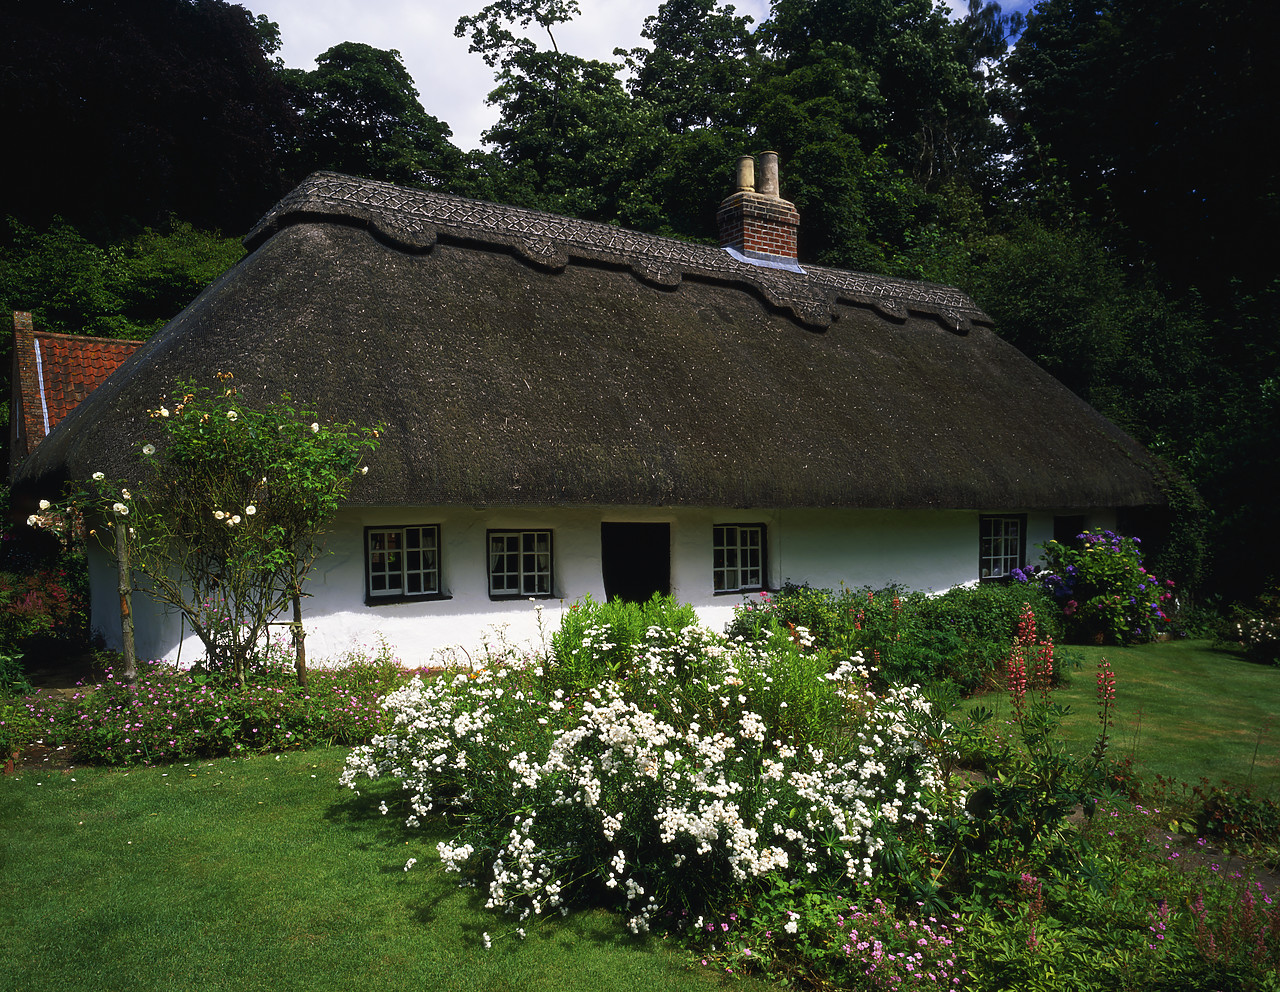 #970184-1 - Thatched Cottage, Harrington, Lincolnshire, England